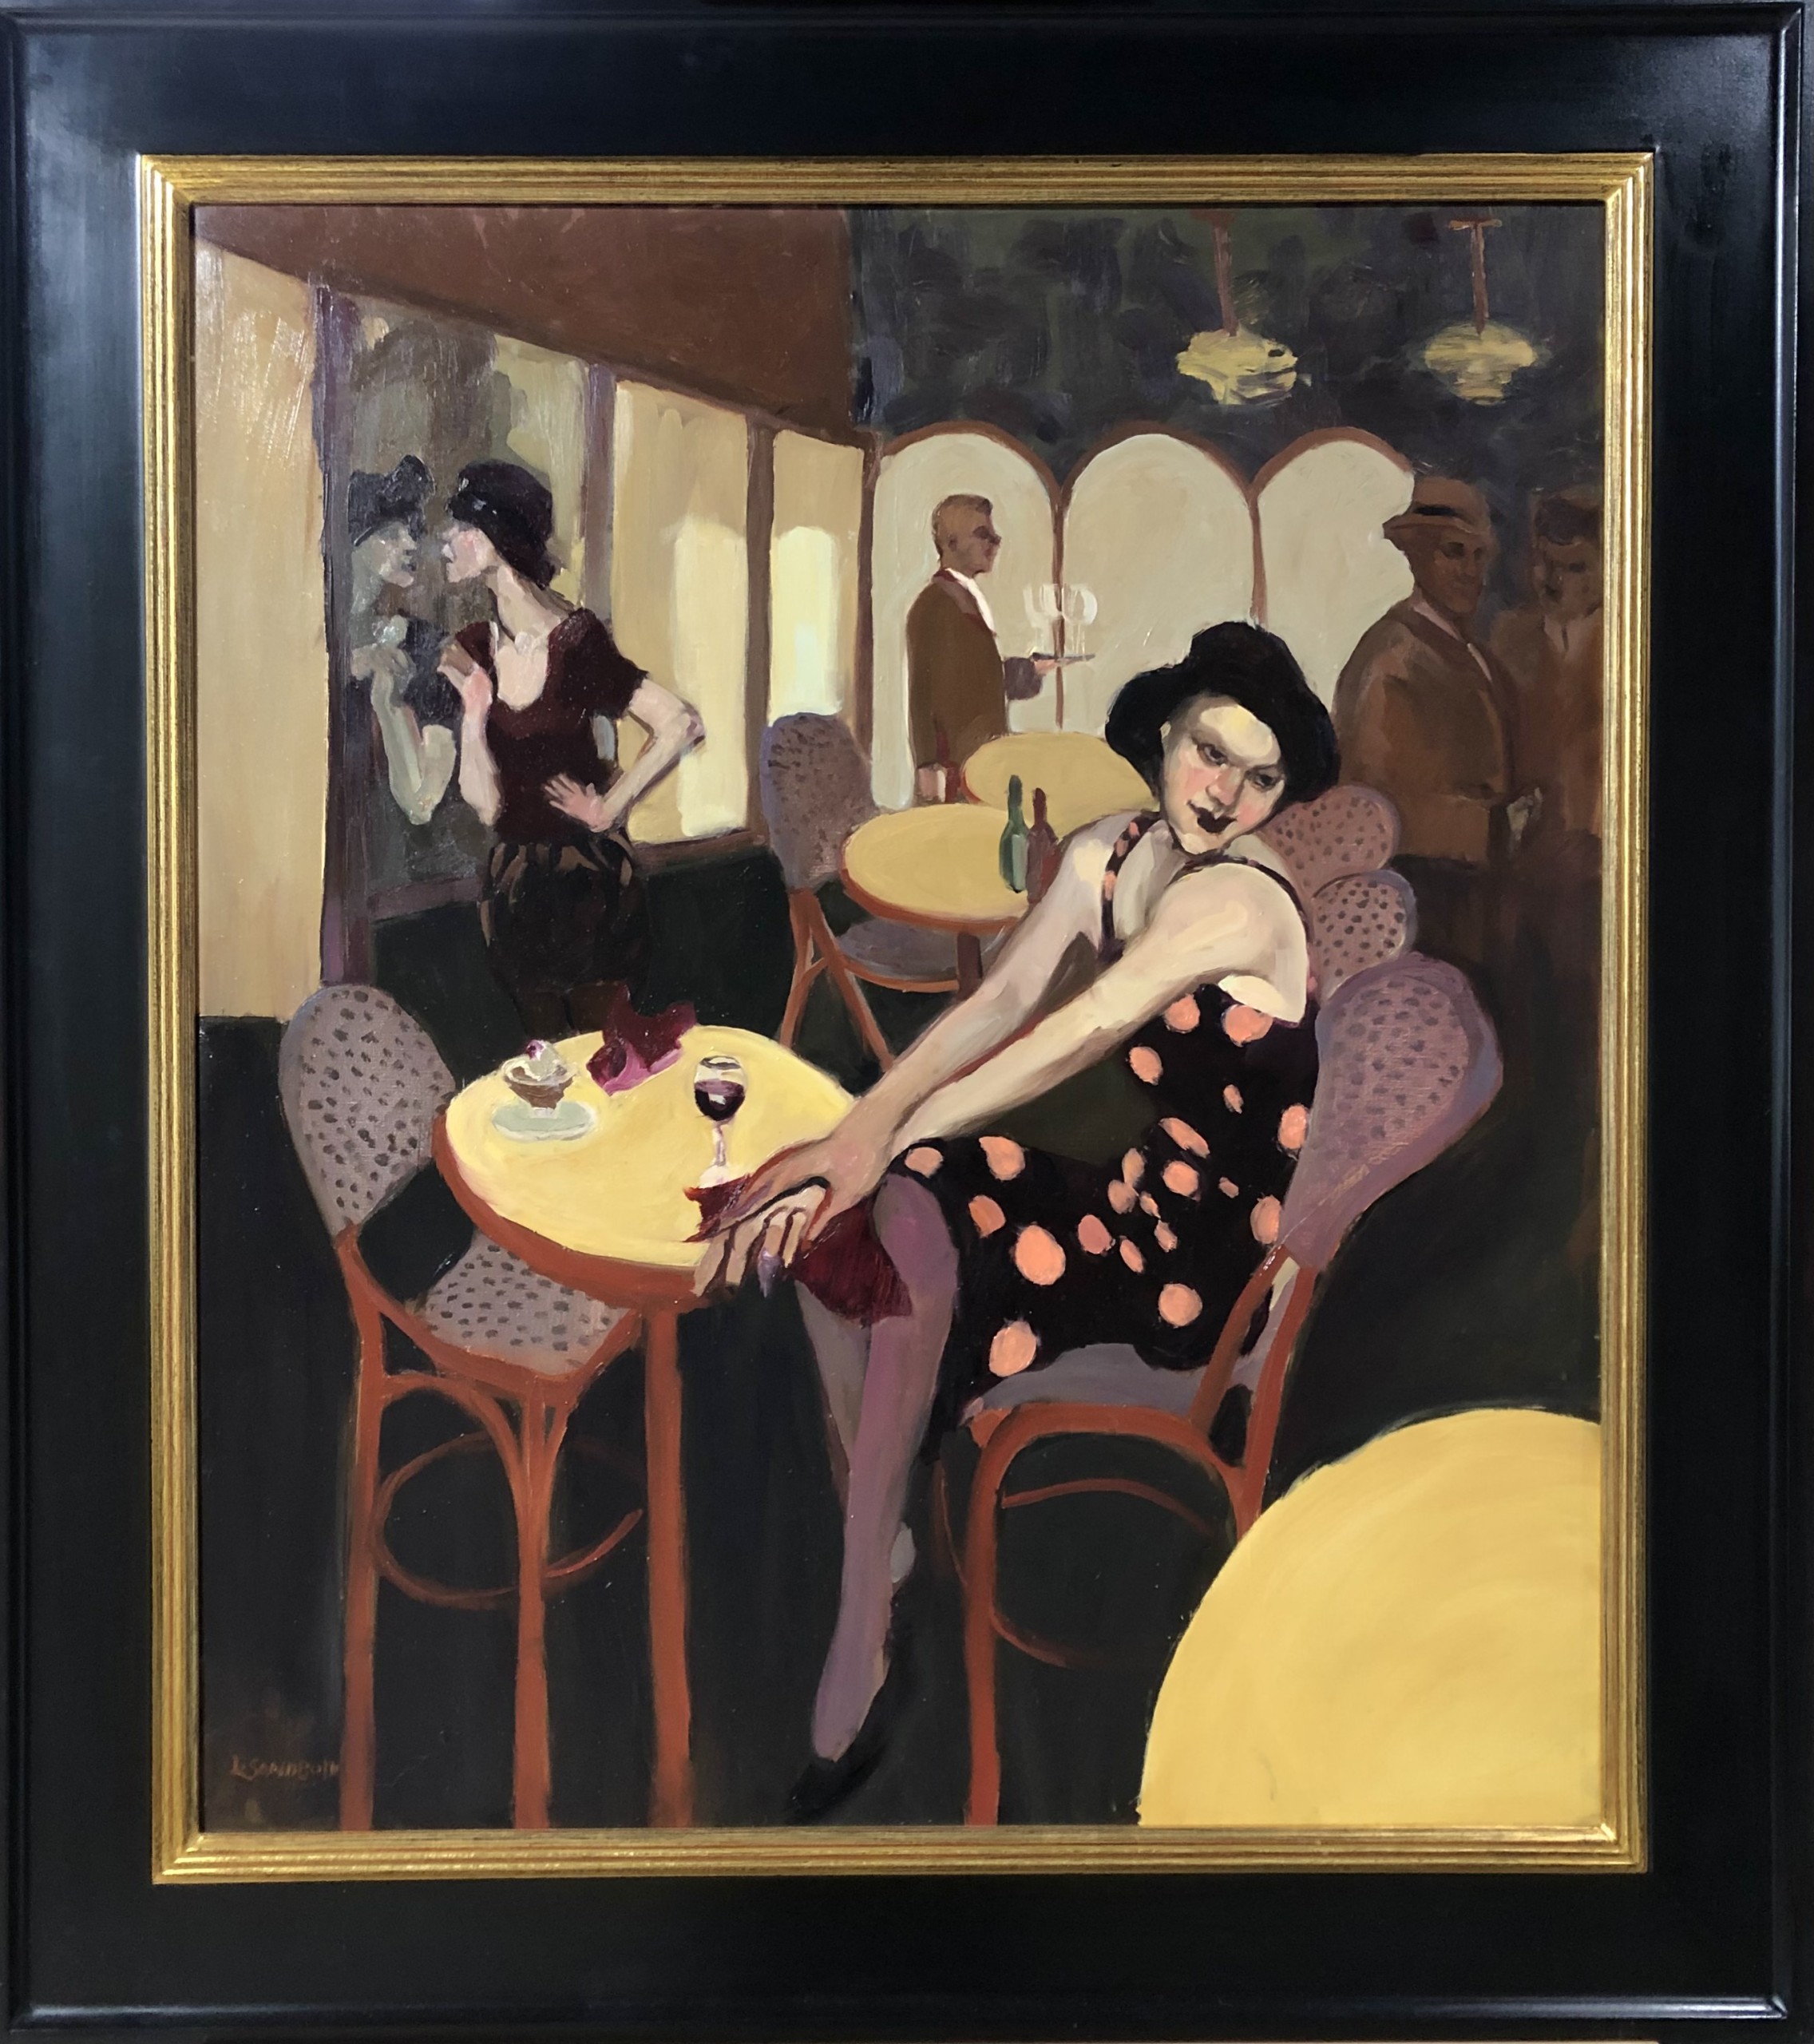 Leslie Sandbulte, “Paris Night Club”, oil on canvas